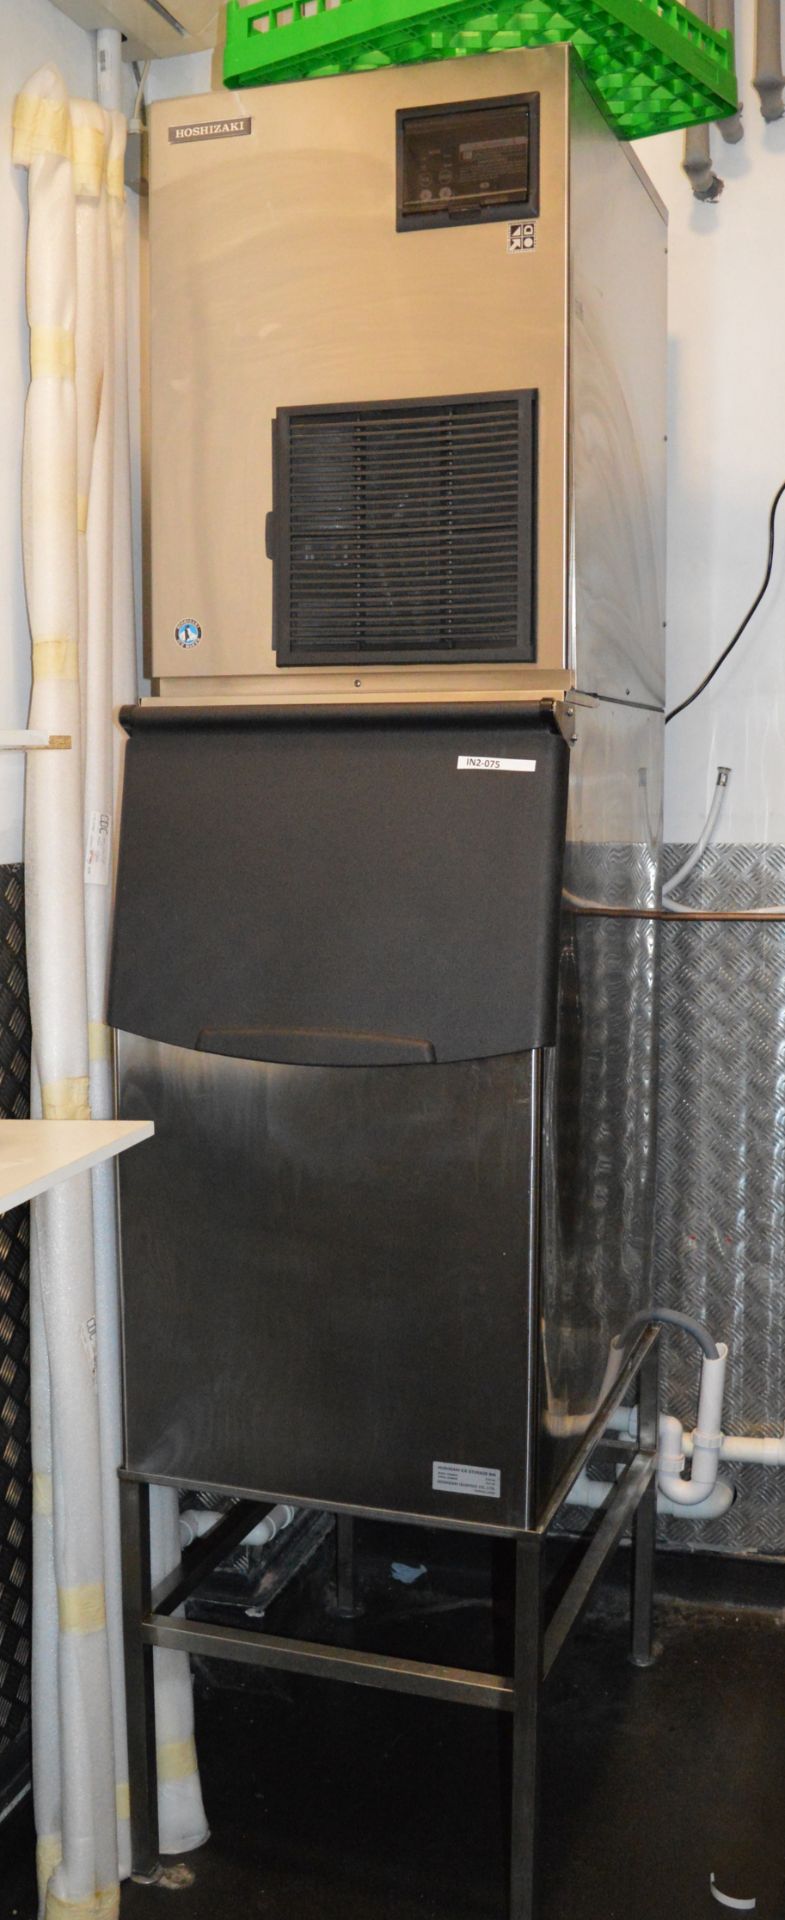 1 x Hoshizaki Air Cool Ice Maker Modular Storage Bin - Impressive 144kg Storage Capacity - - Image 2 of 8